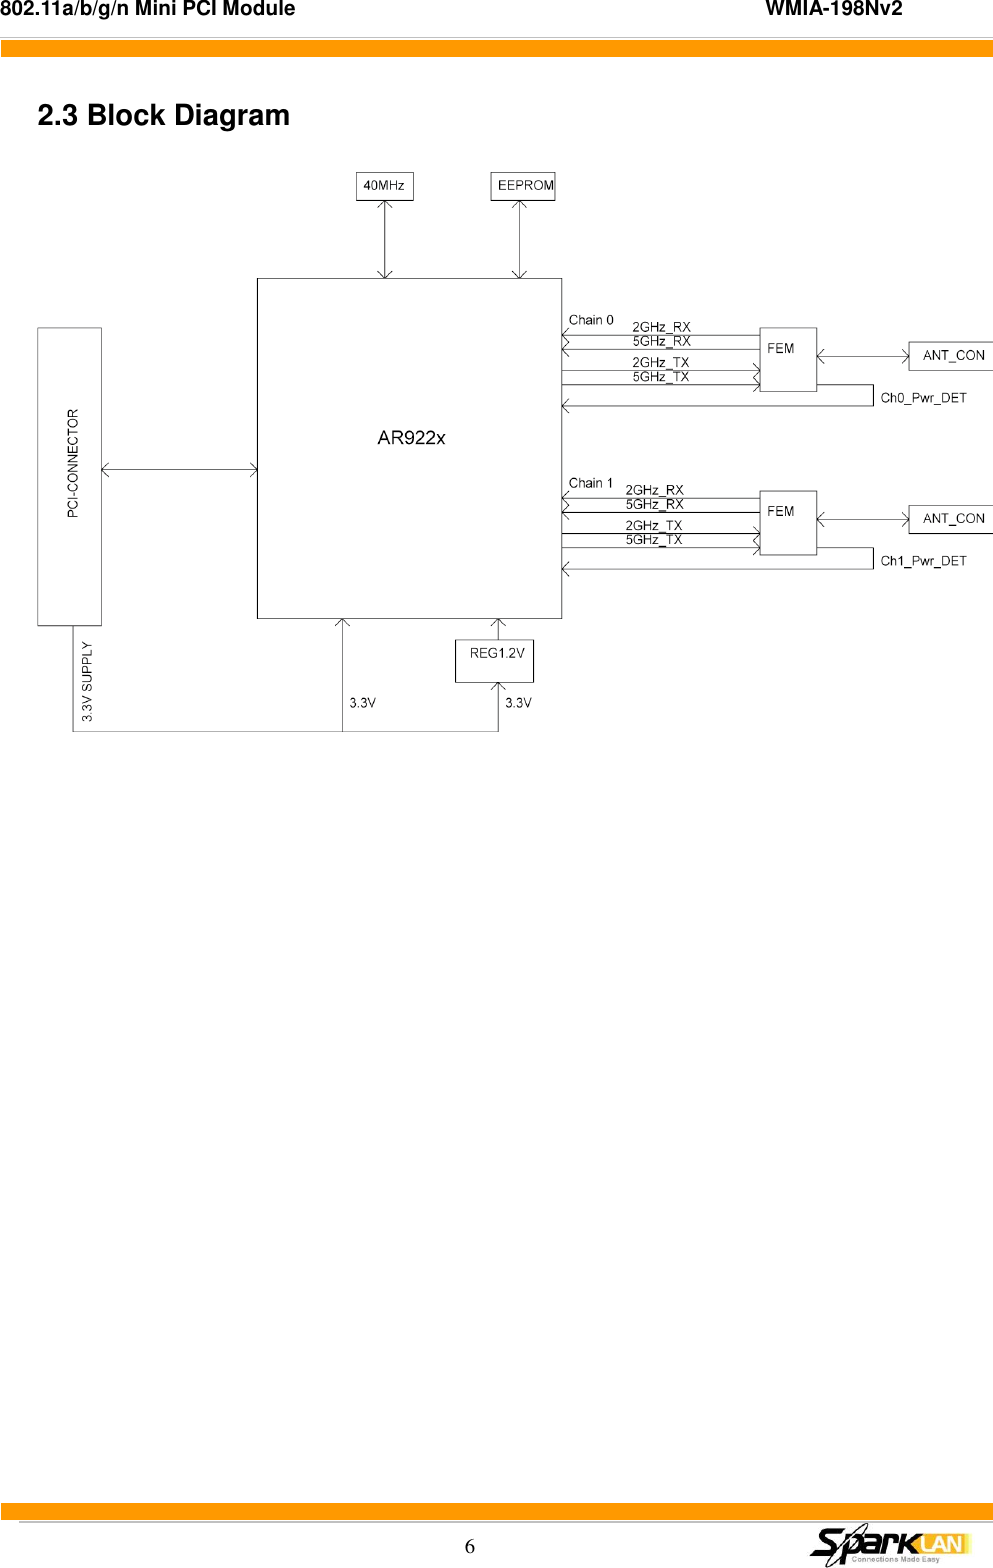 802.11a/b/g/n Mini PCI Module                                                                                          WMIA-198Nv2  6 2.3 Block Diagram       